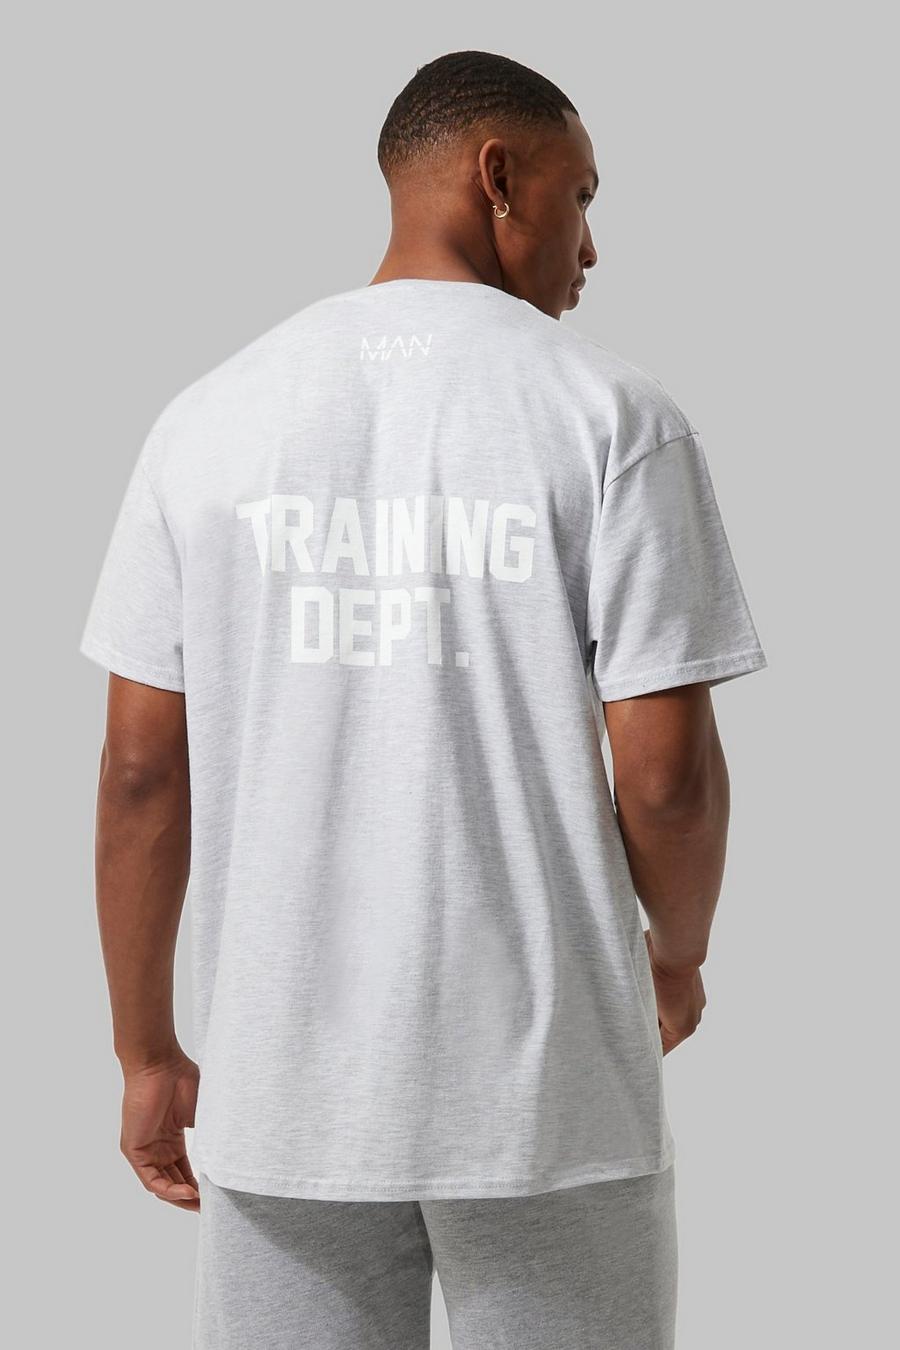 Grey Man Active Training Dept Oversized T-shirt